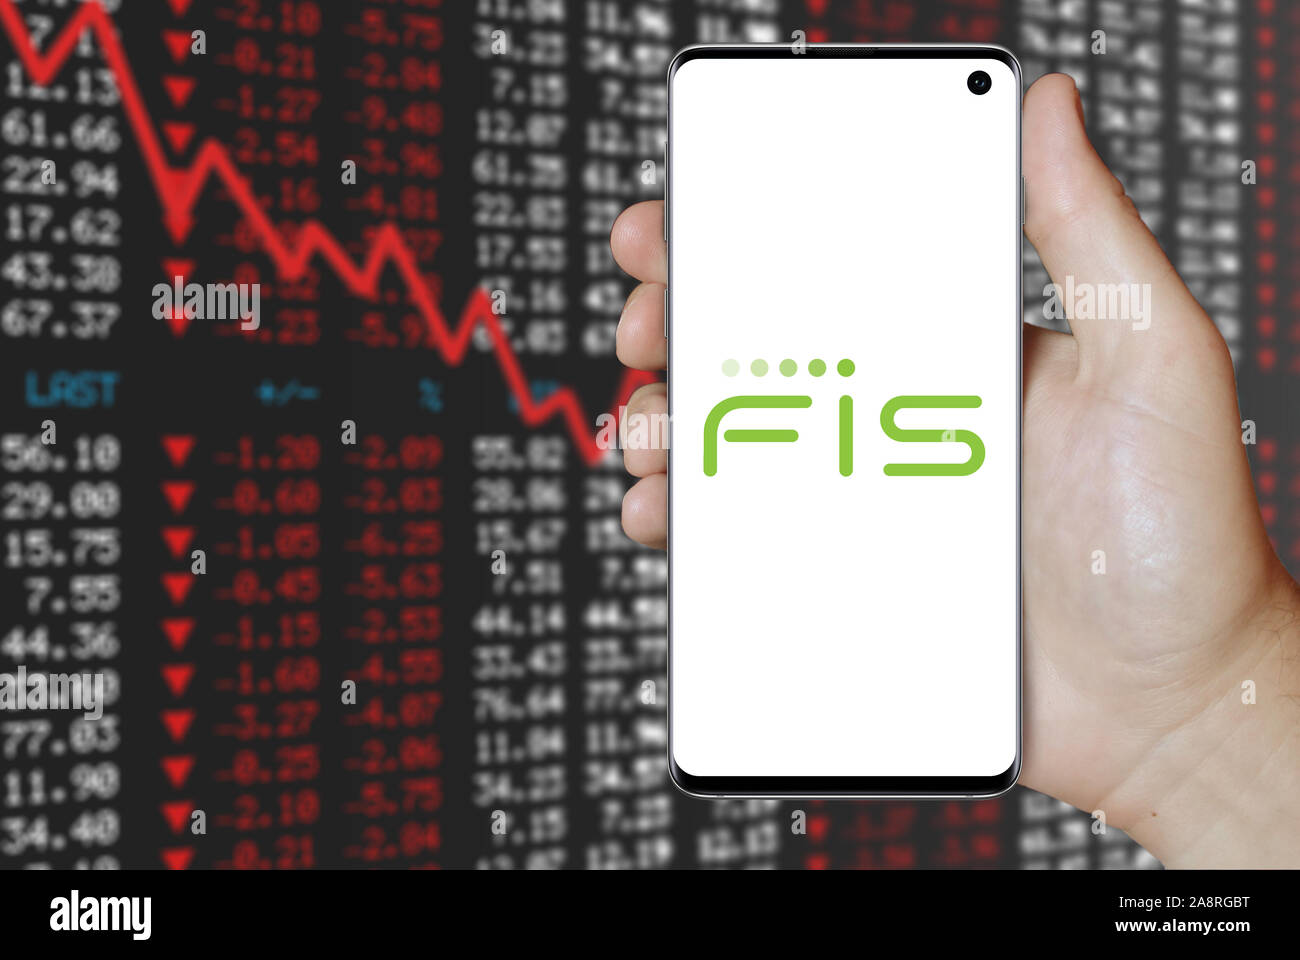 Logo of public company Fidelity National Information Services displayed on a smartphone. Negative stock market background. Credit: PIXDUCE Stock Photo